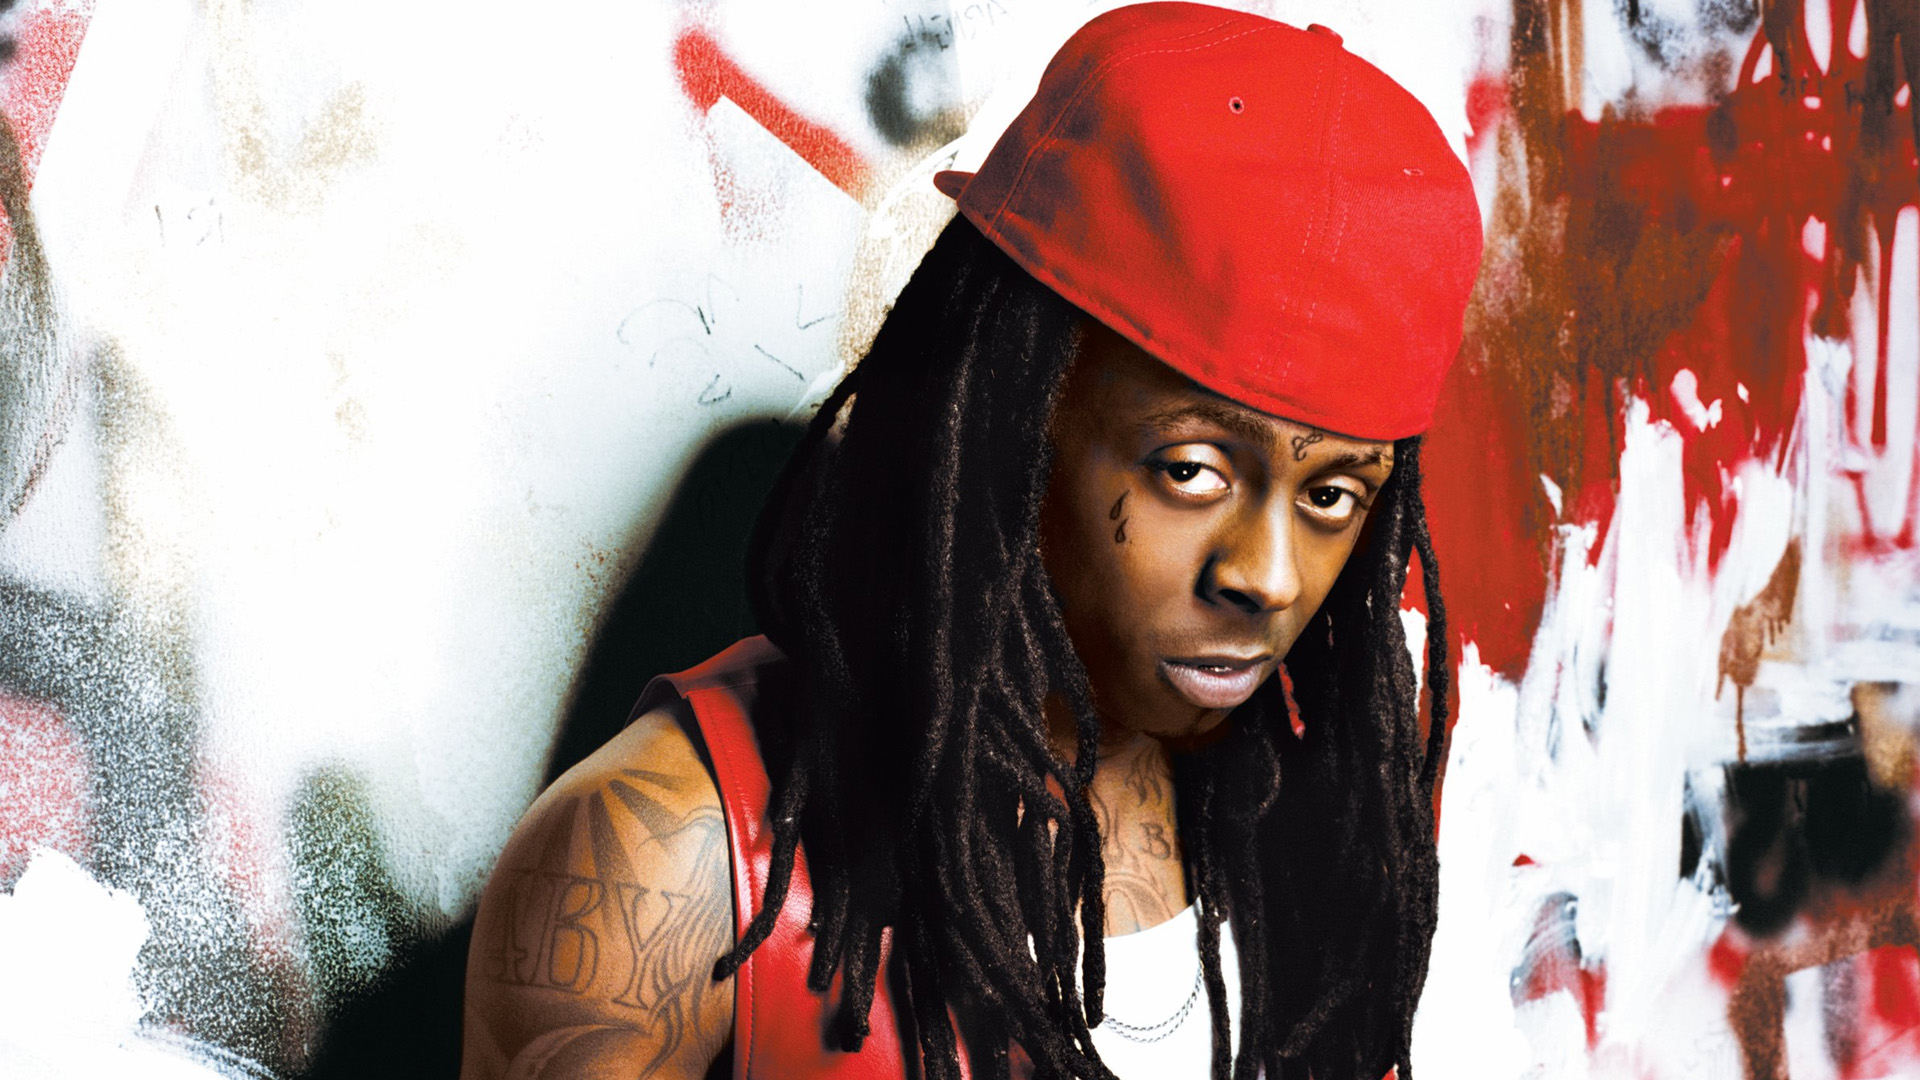 Hip hop artist Lil Wayne